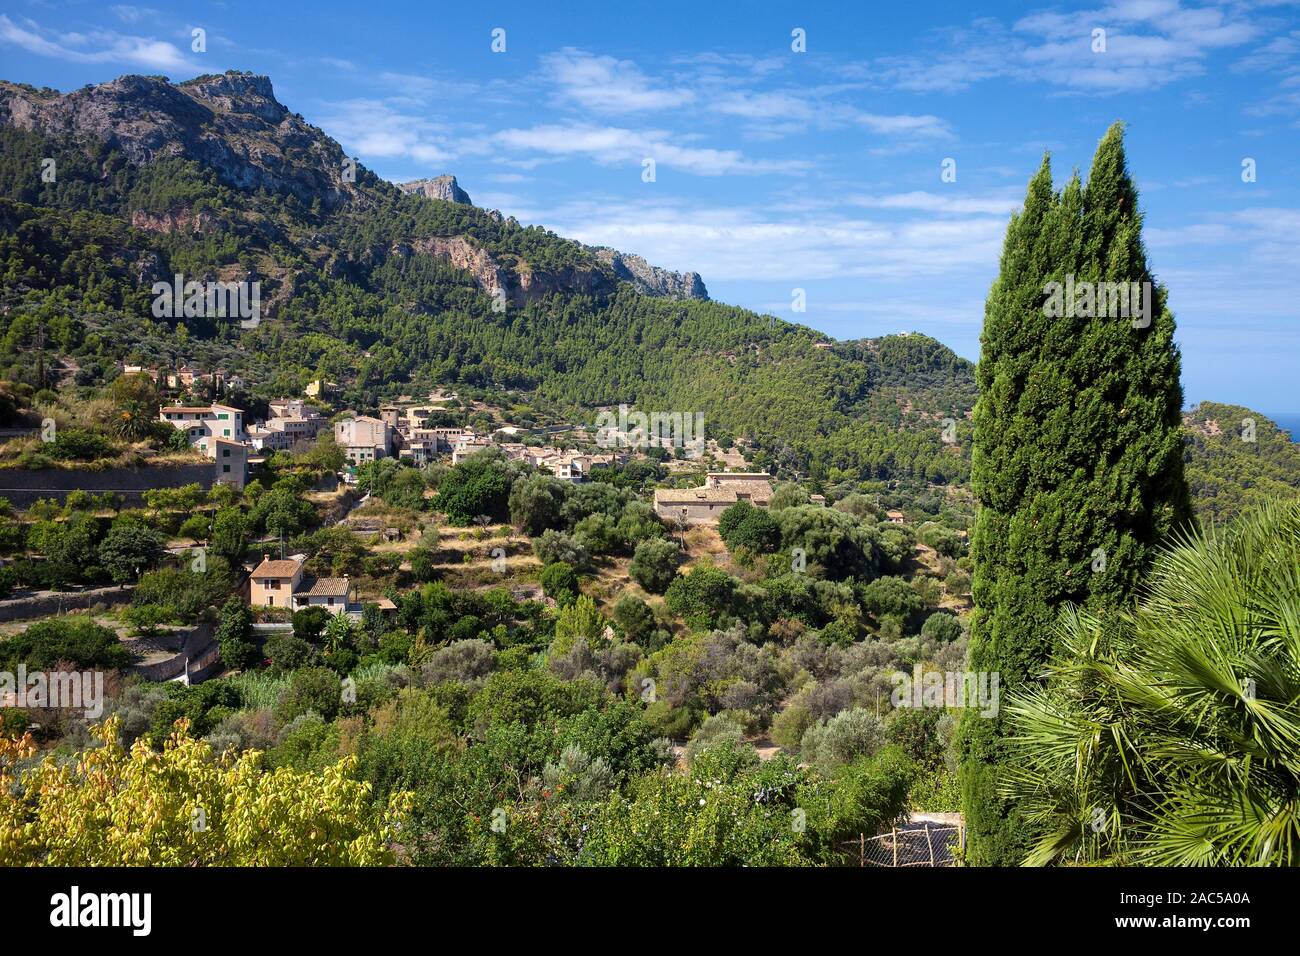 La aldea de montaña Estellences al oeste de Mallorca, Islas Baleares, España Foto de stock